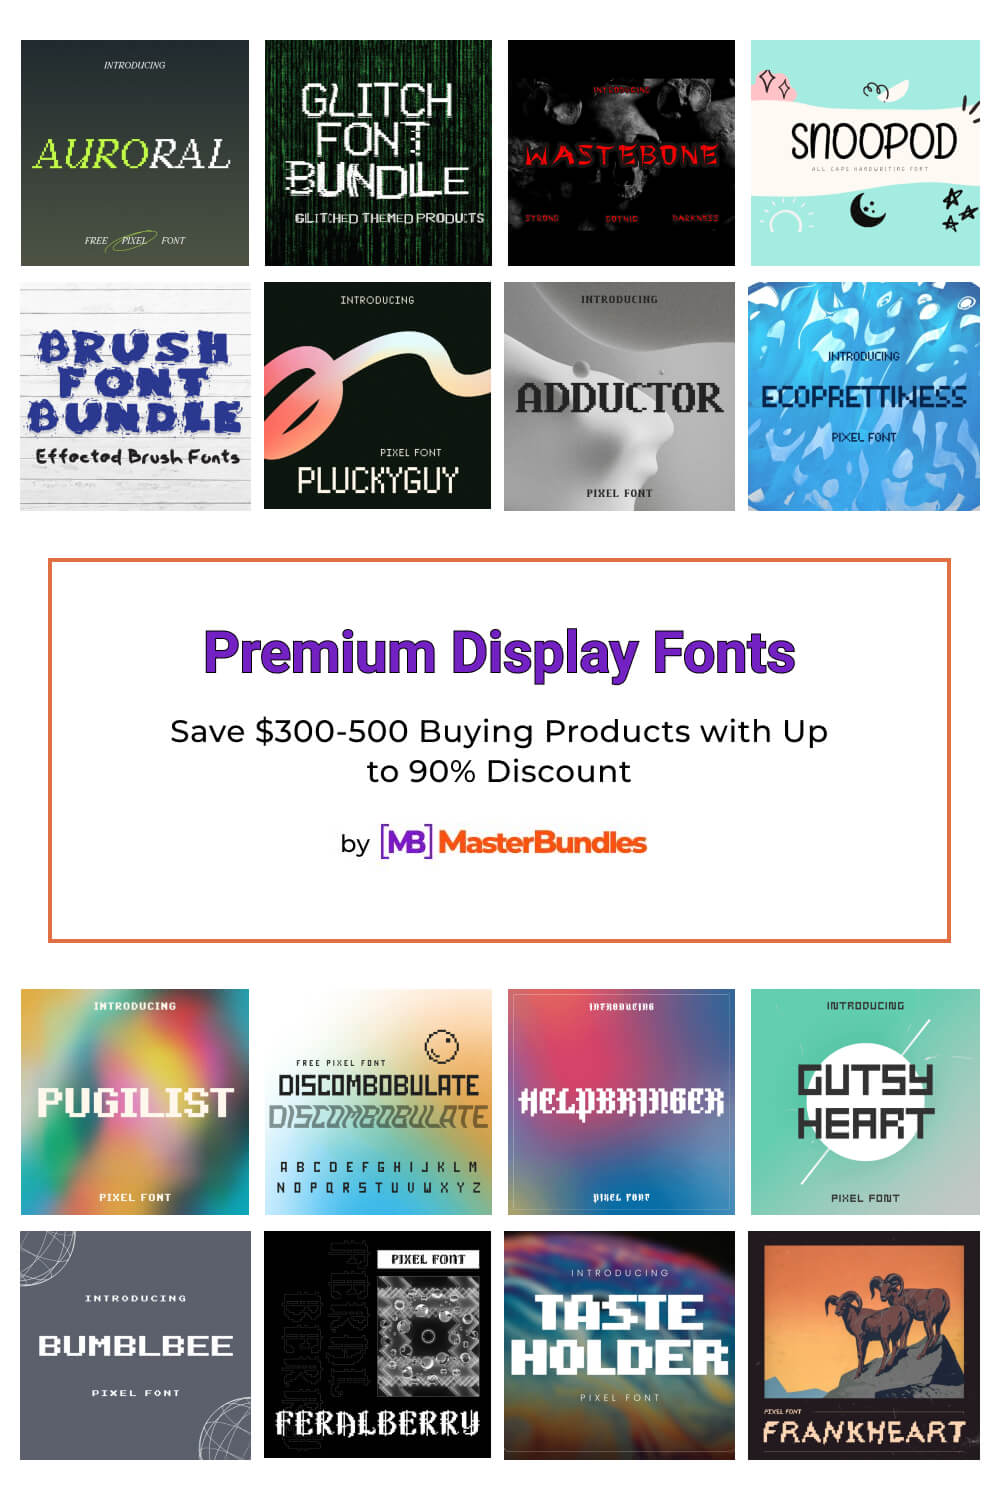 premium display fonts pinterest image.